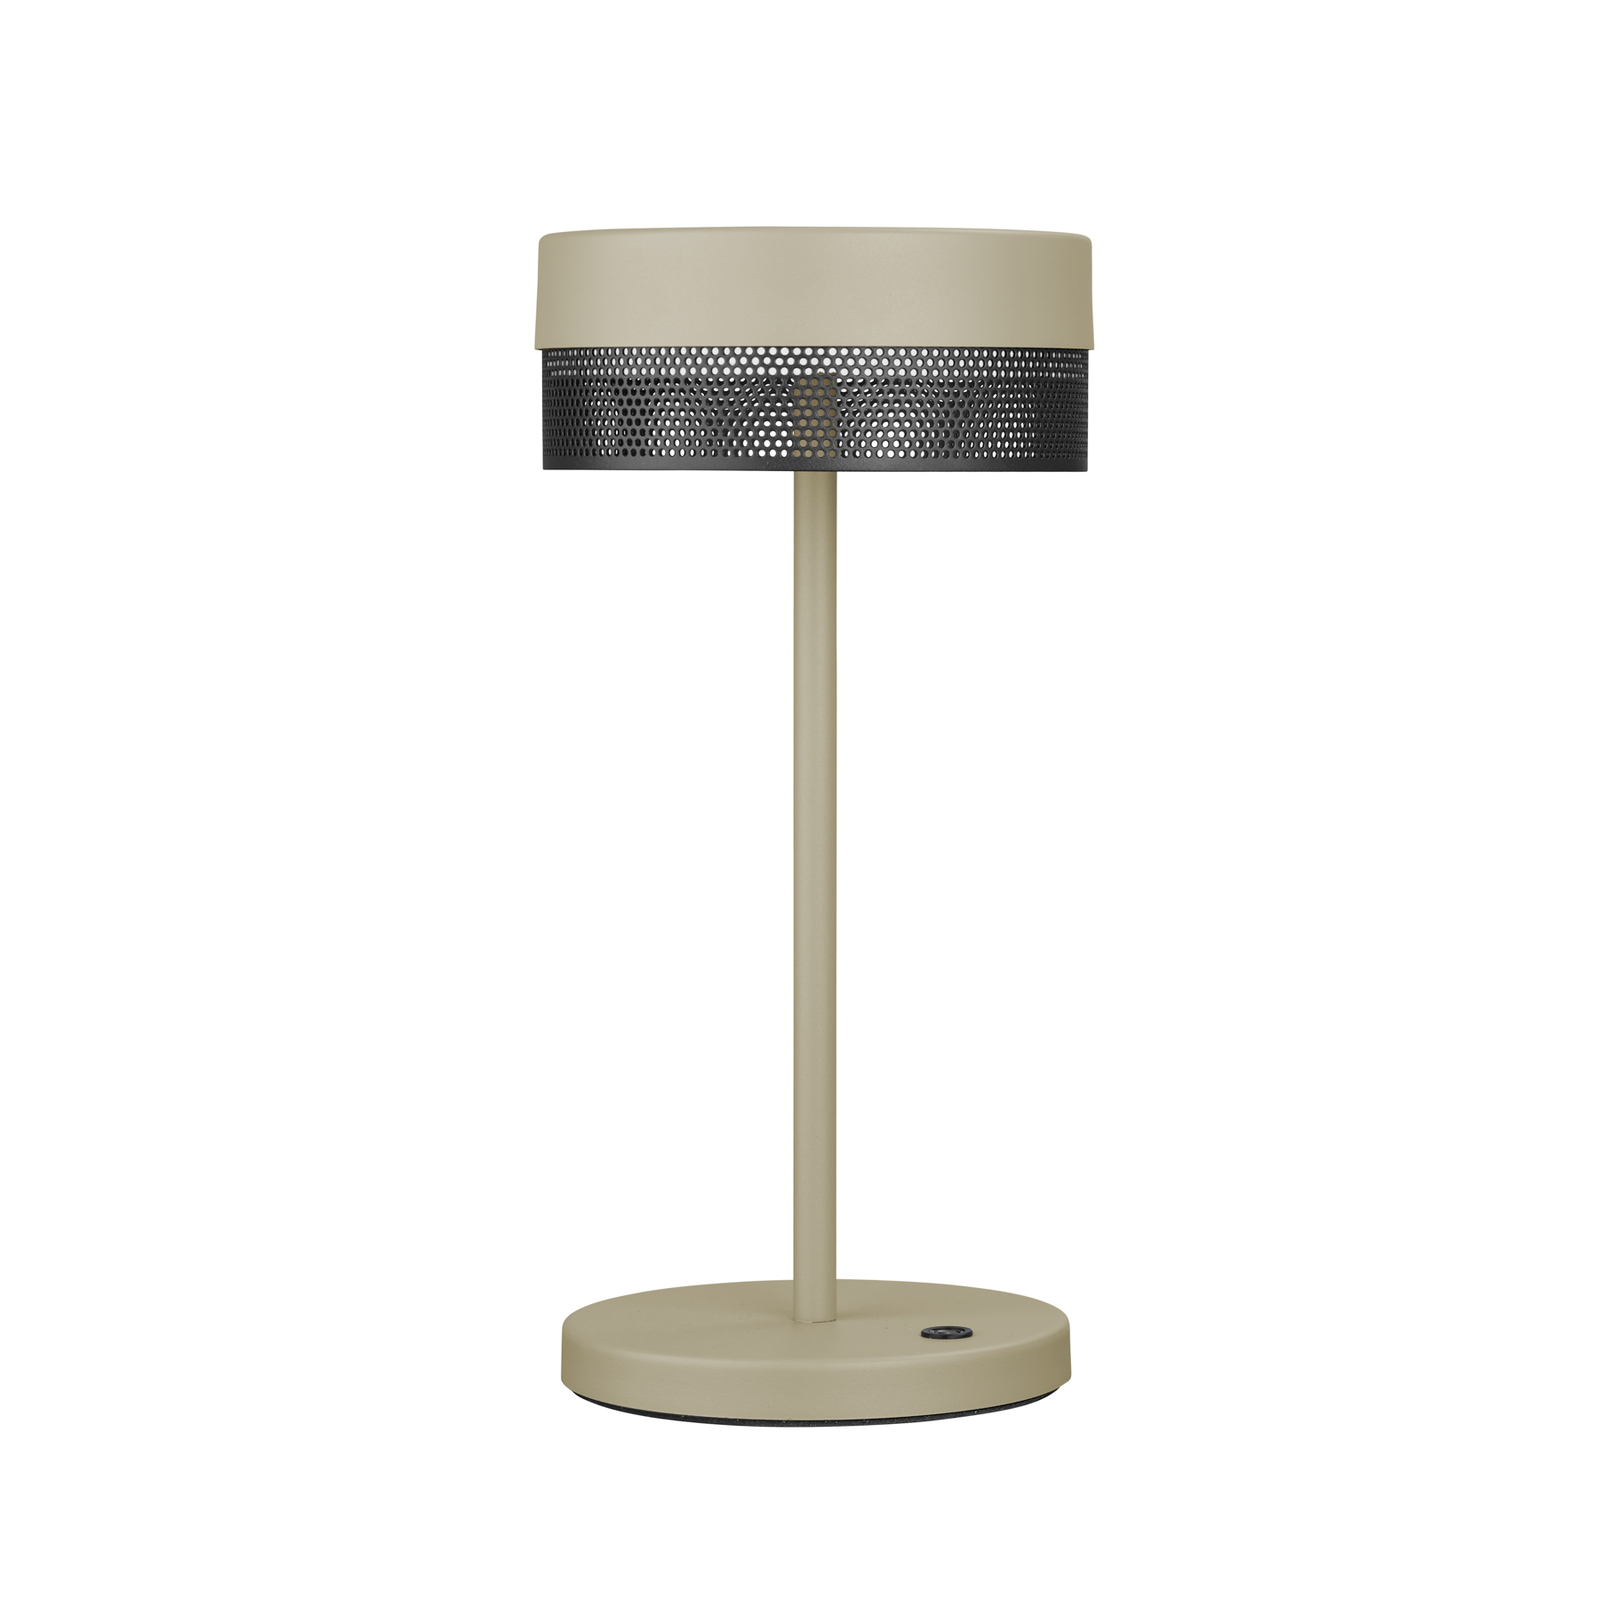 LED-bordslampa Mesh batteri, höjd 30cm sand/svart